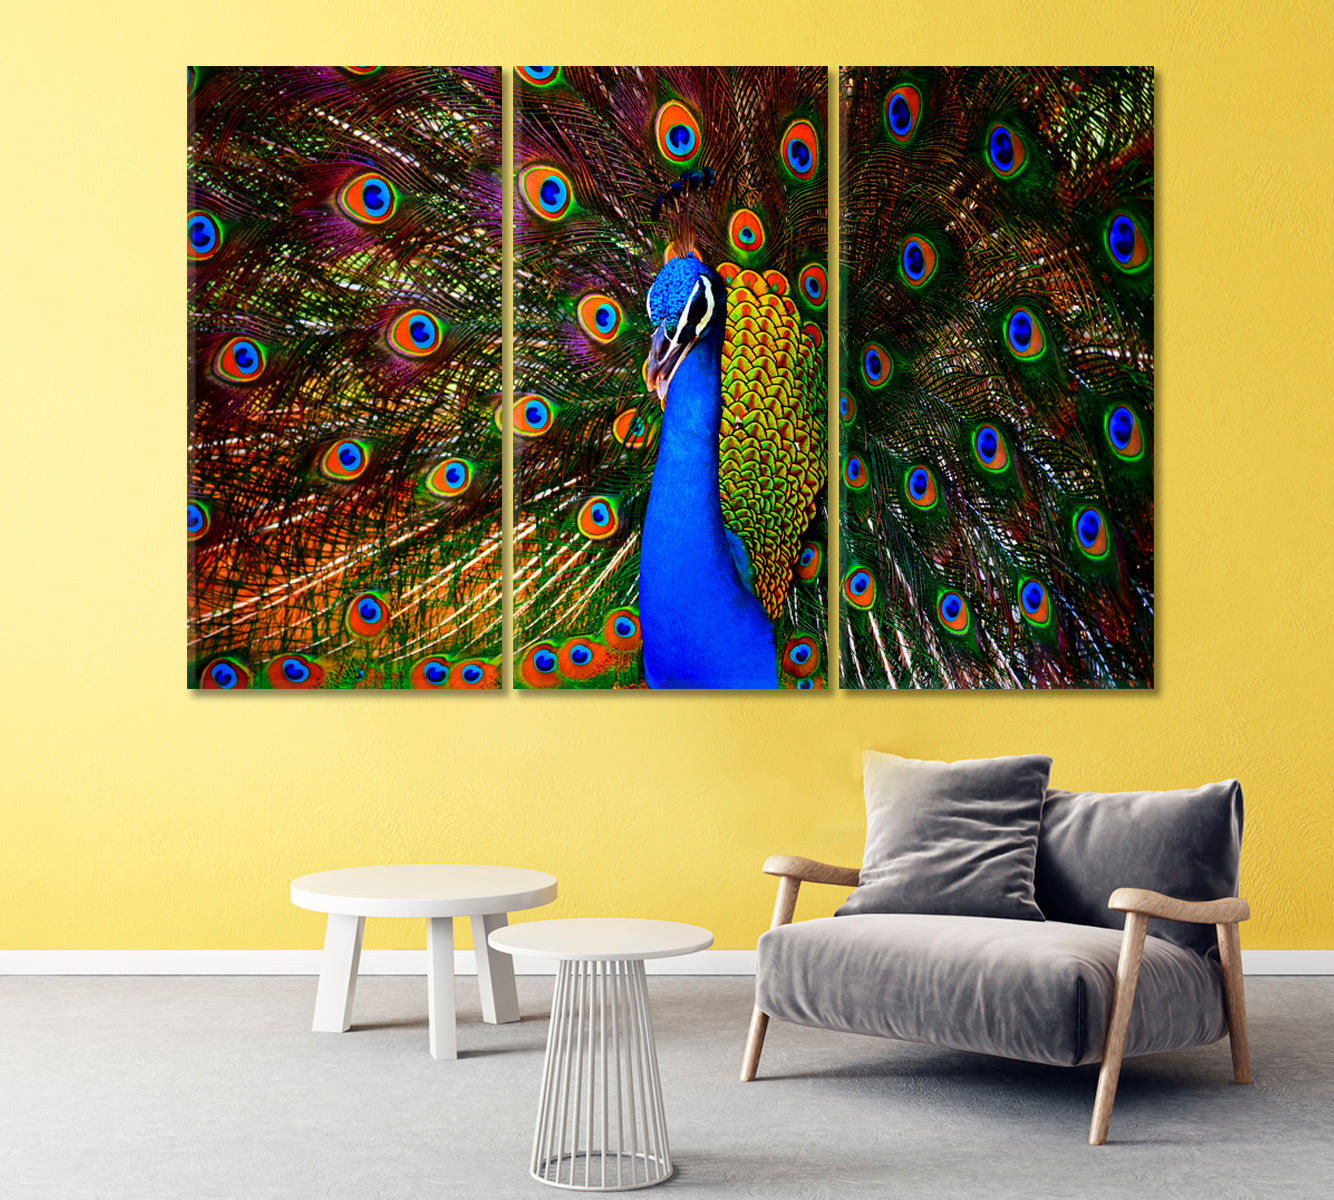 Colorful Dancing Peacock Canvas Print-Canvas Print-CetArt-1 Panel-24x16 inches-CetArt